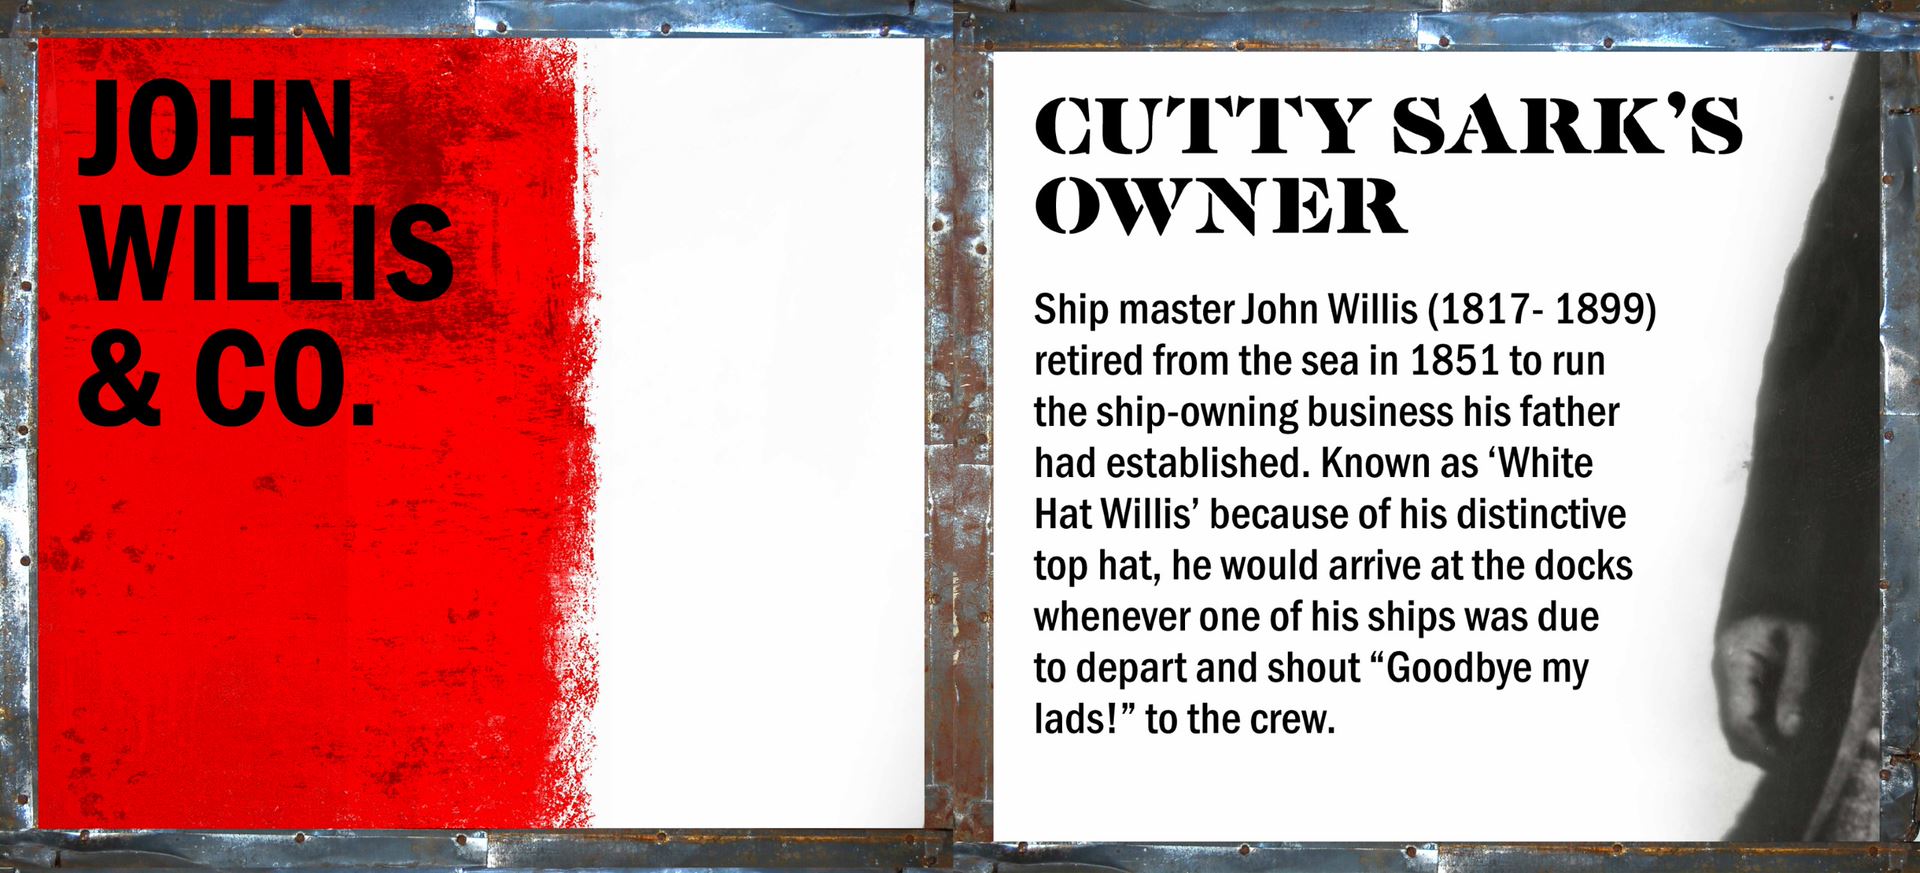 Cutty Sark owner John Willis & co.